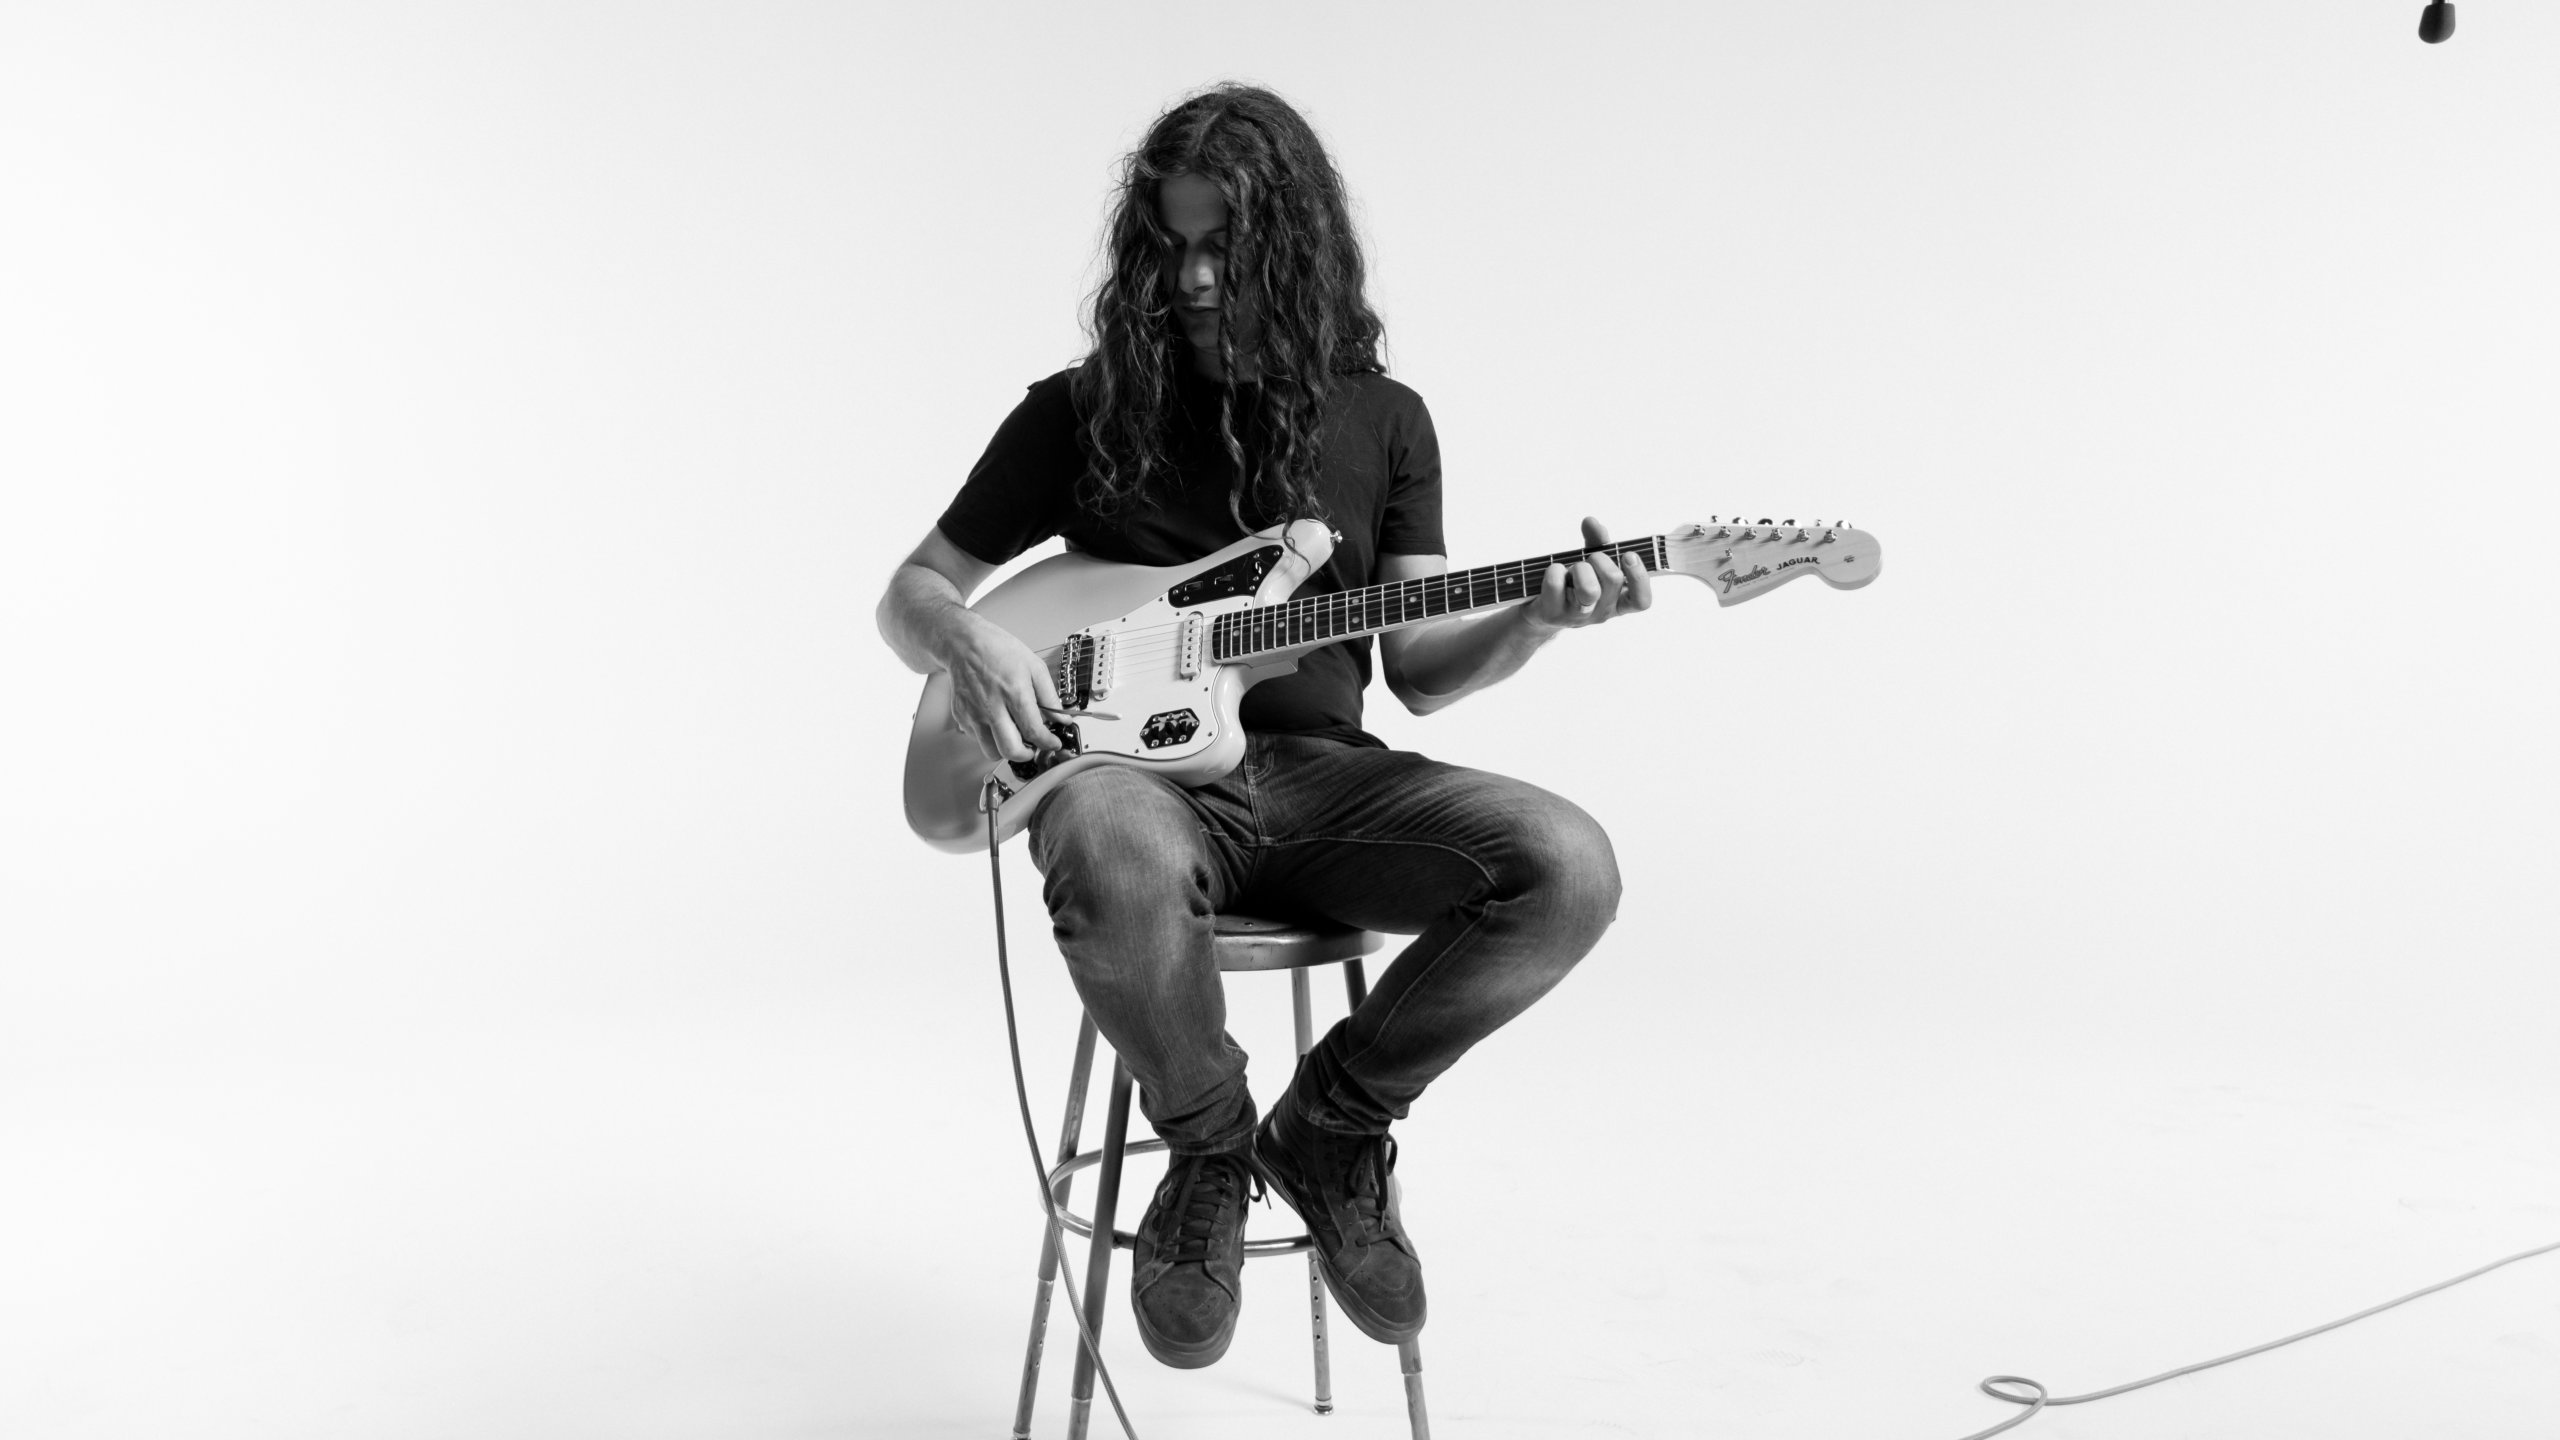 Kurt Vile plays a Fender Jaguar